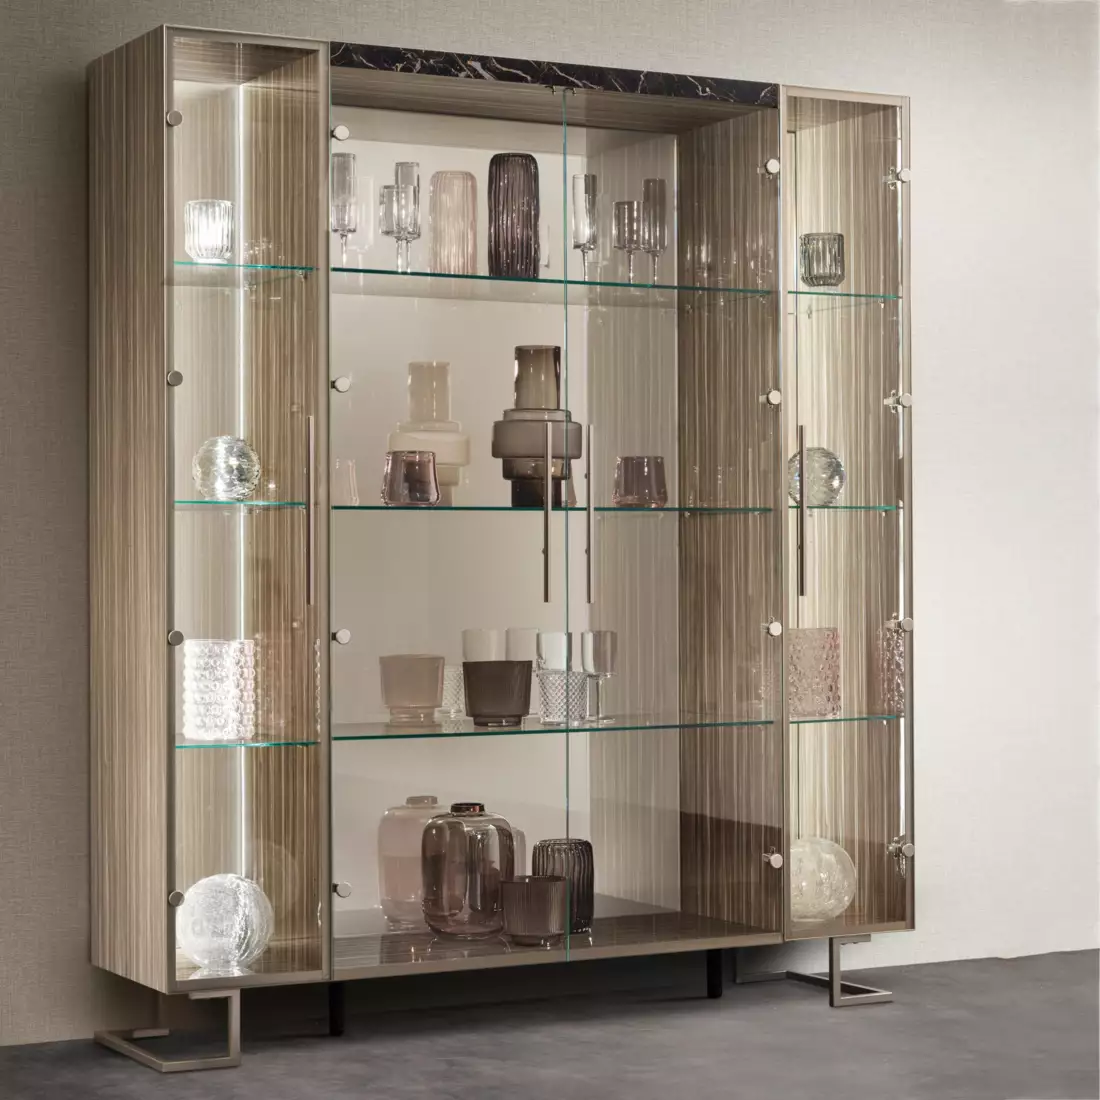 Adora-Luce-Dark-4-doors-glass-cabinet